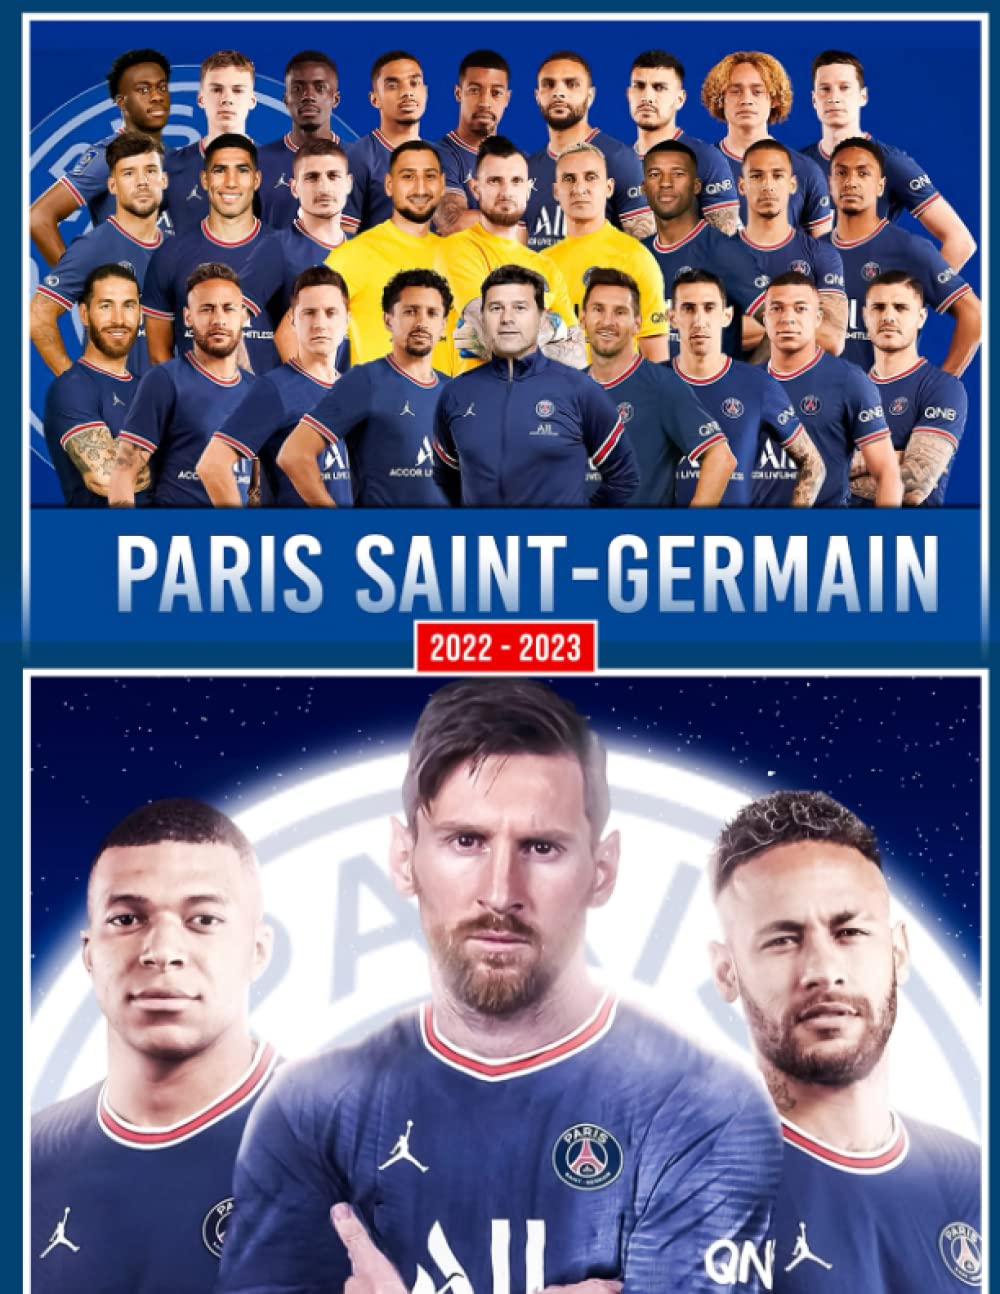 Paris Saint Germain 2022 Calendar: Football Team Top Players Photography January 2022 2023 Squared Monthly Calendar, 18 Months. BONUS 6 Months. Soccers Fans Kalendar Calendario Calendrier: Zapel, Adam: 9798767694259: Books